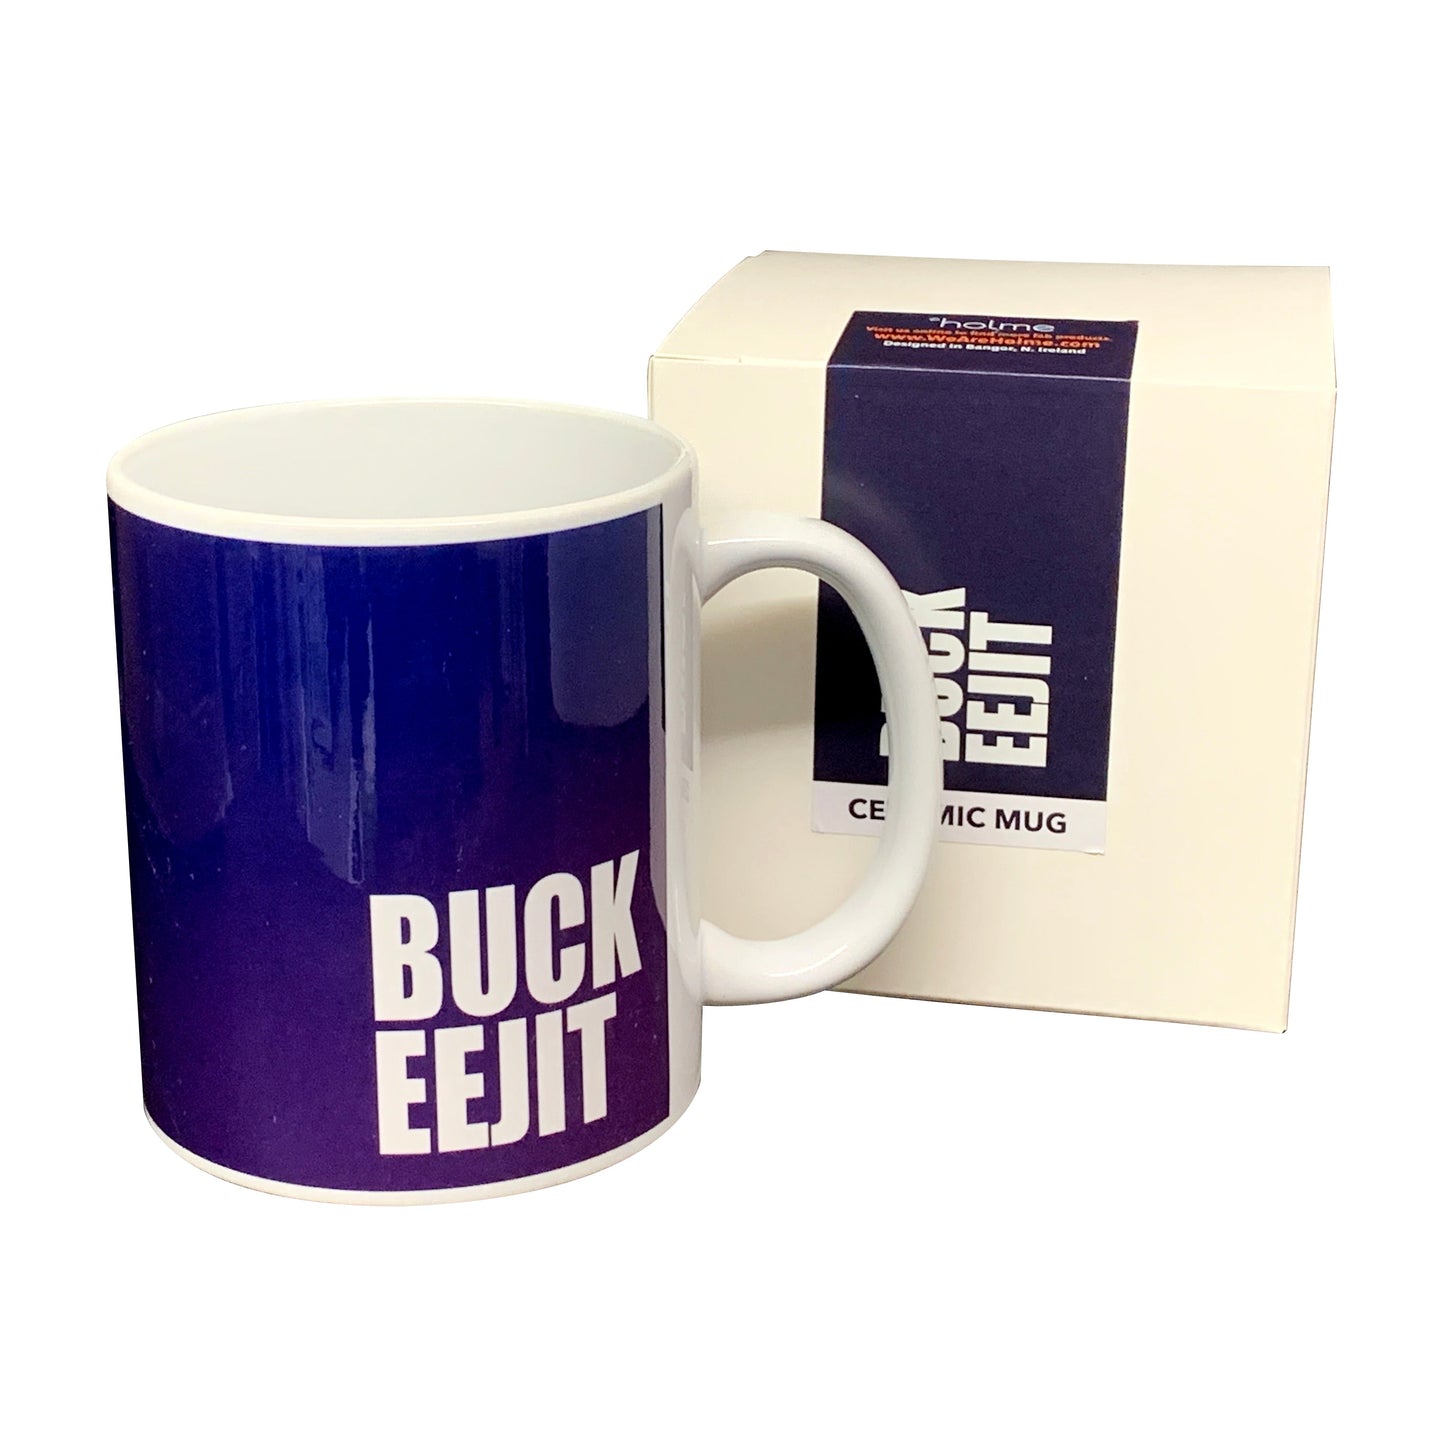 Northern Ireland Slang Mug - Buck Ejit